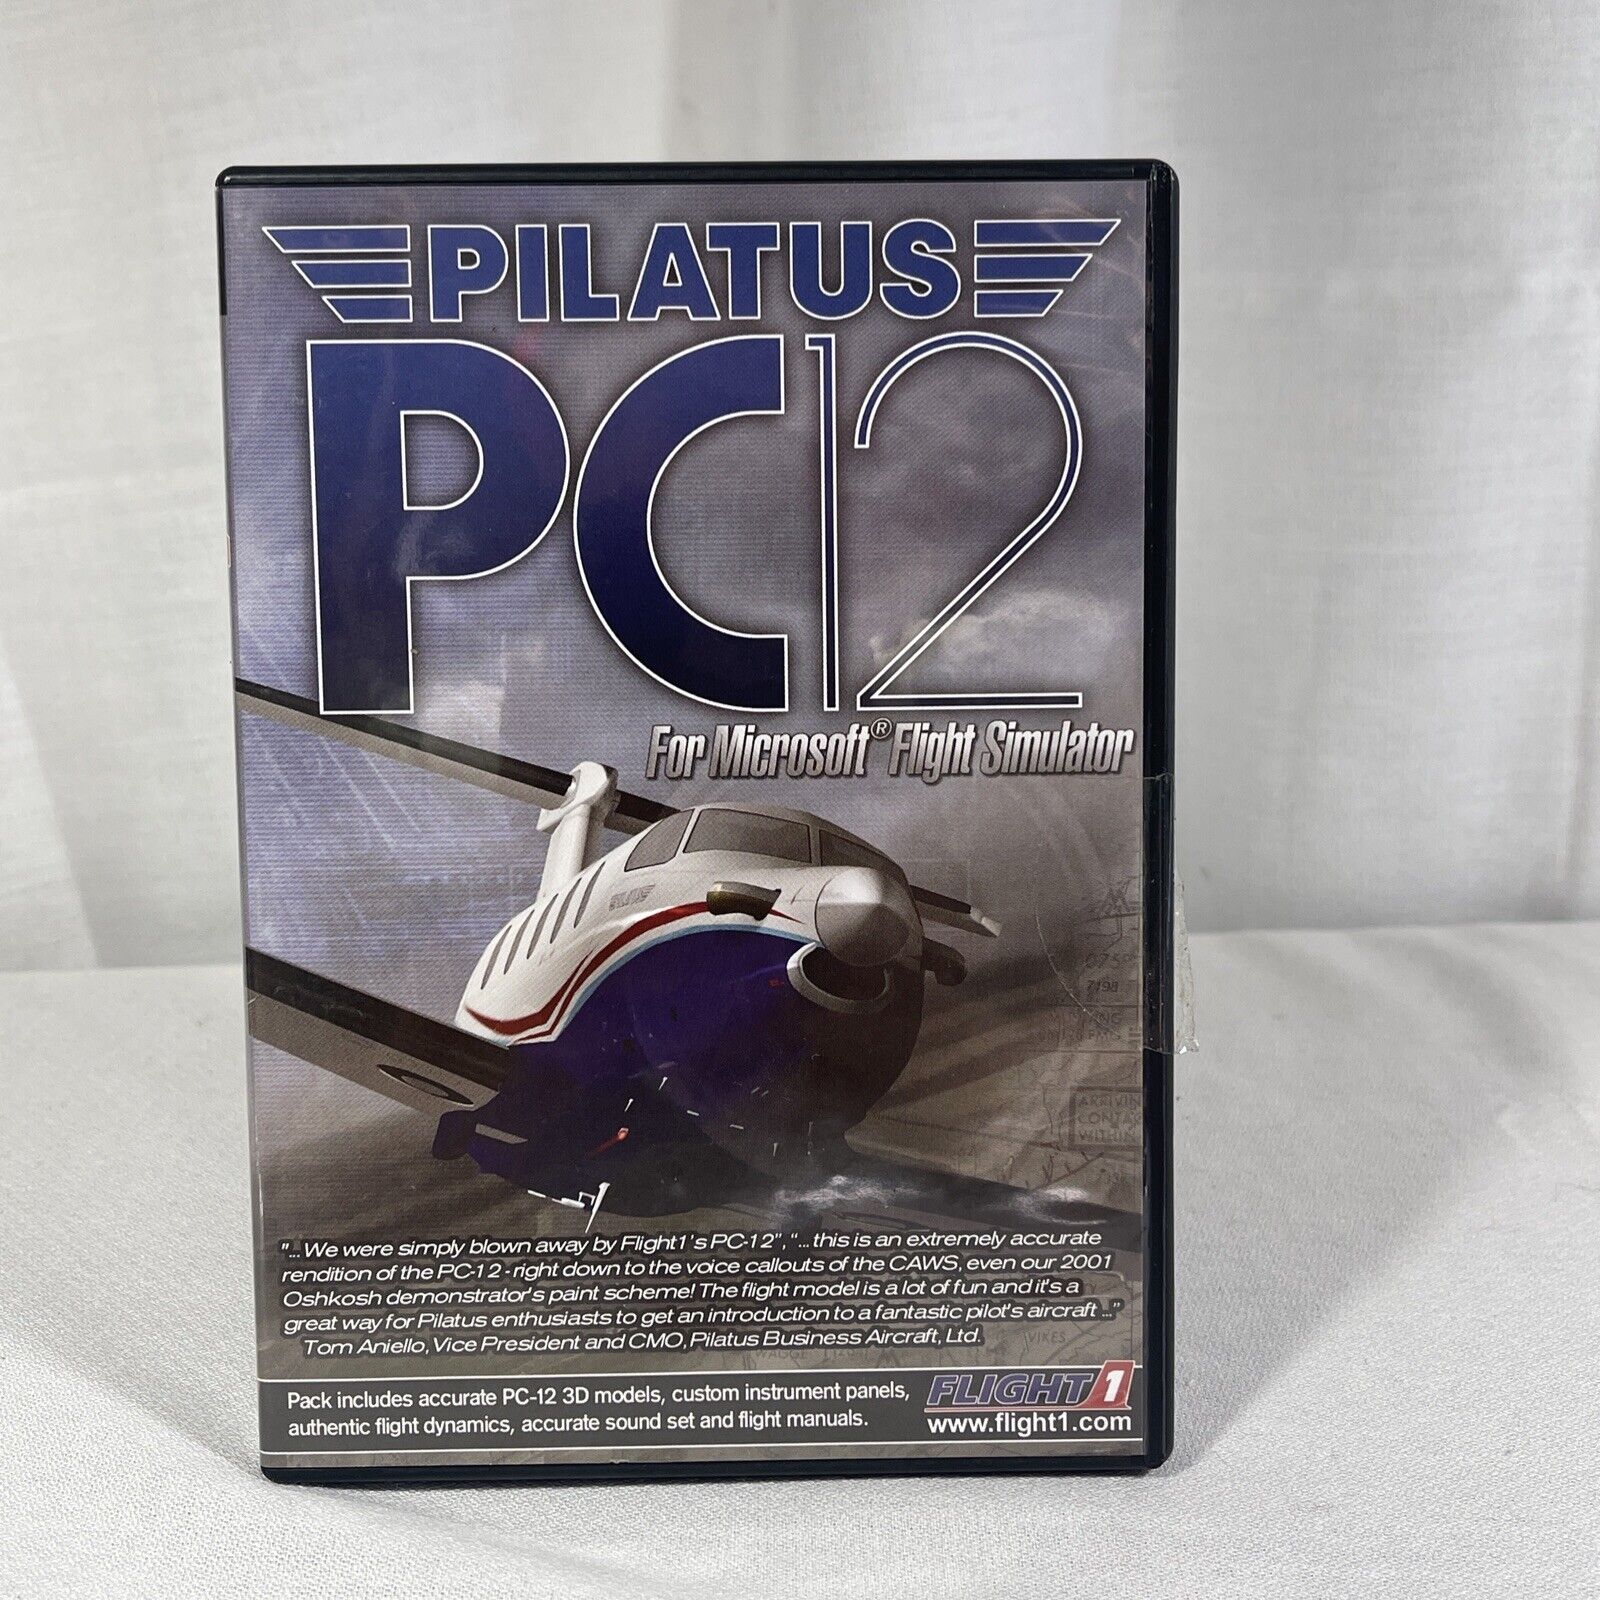 Pilatus PC12 Flight 1 For Microsoft Flight Simulator Software CD In Case Manual